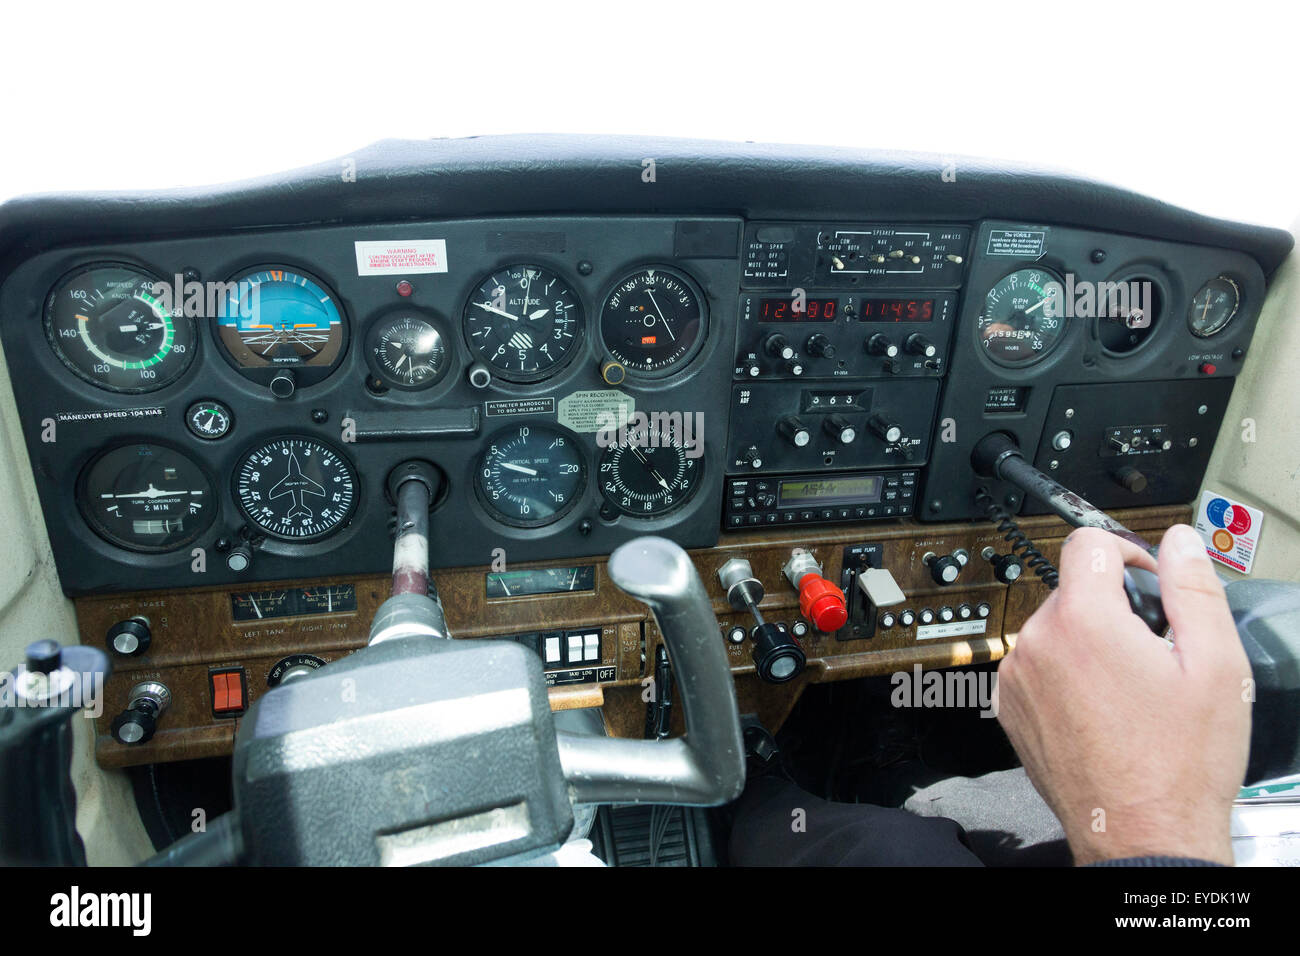 Tableau de bord de pilotage d'un avion léger Cessna 152 Photo Stock - Alamy